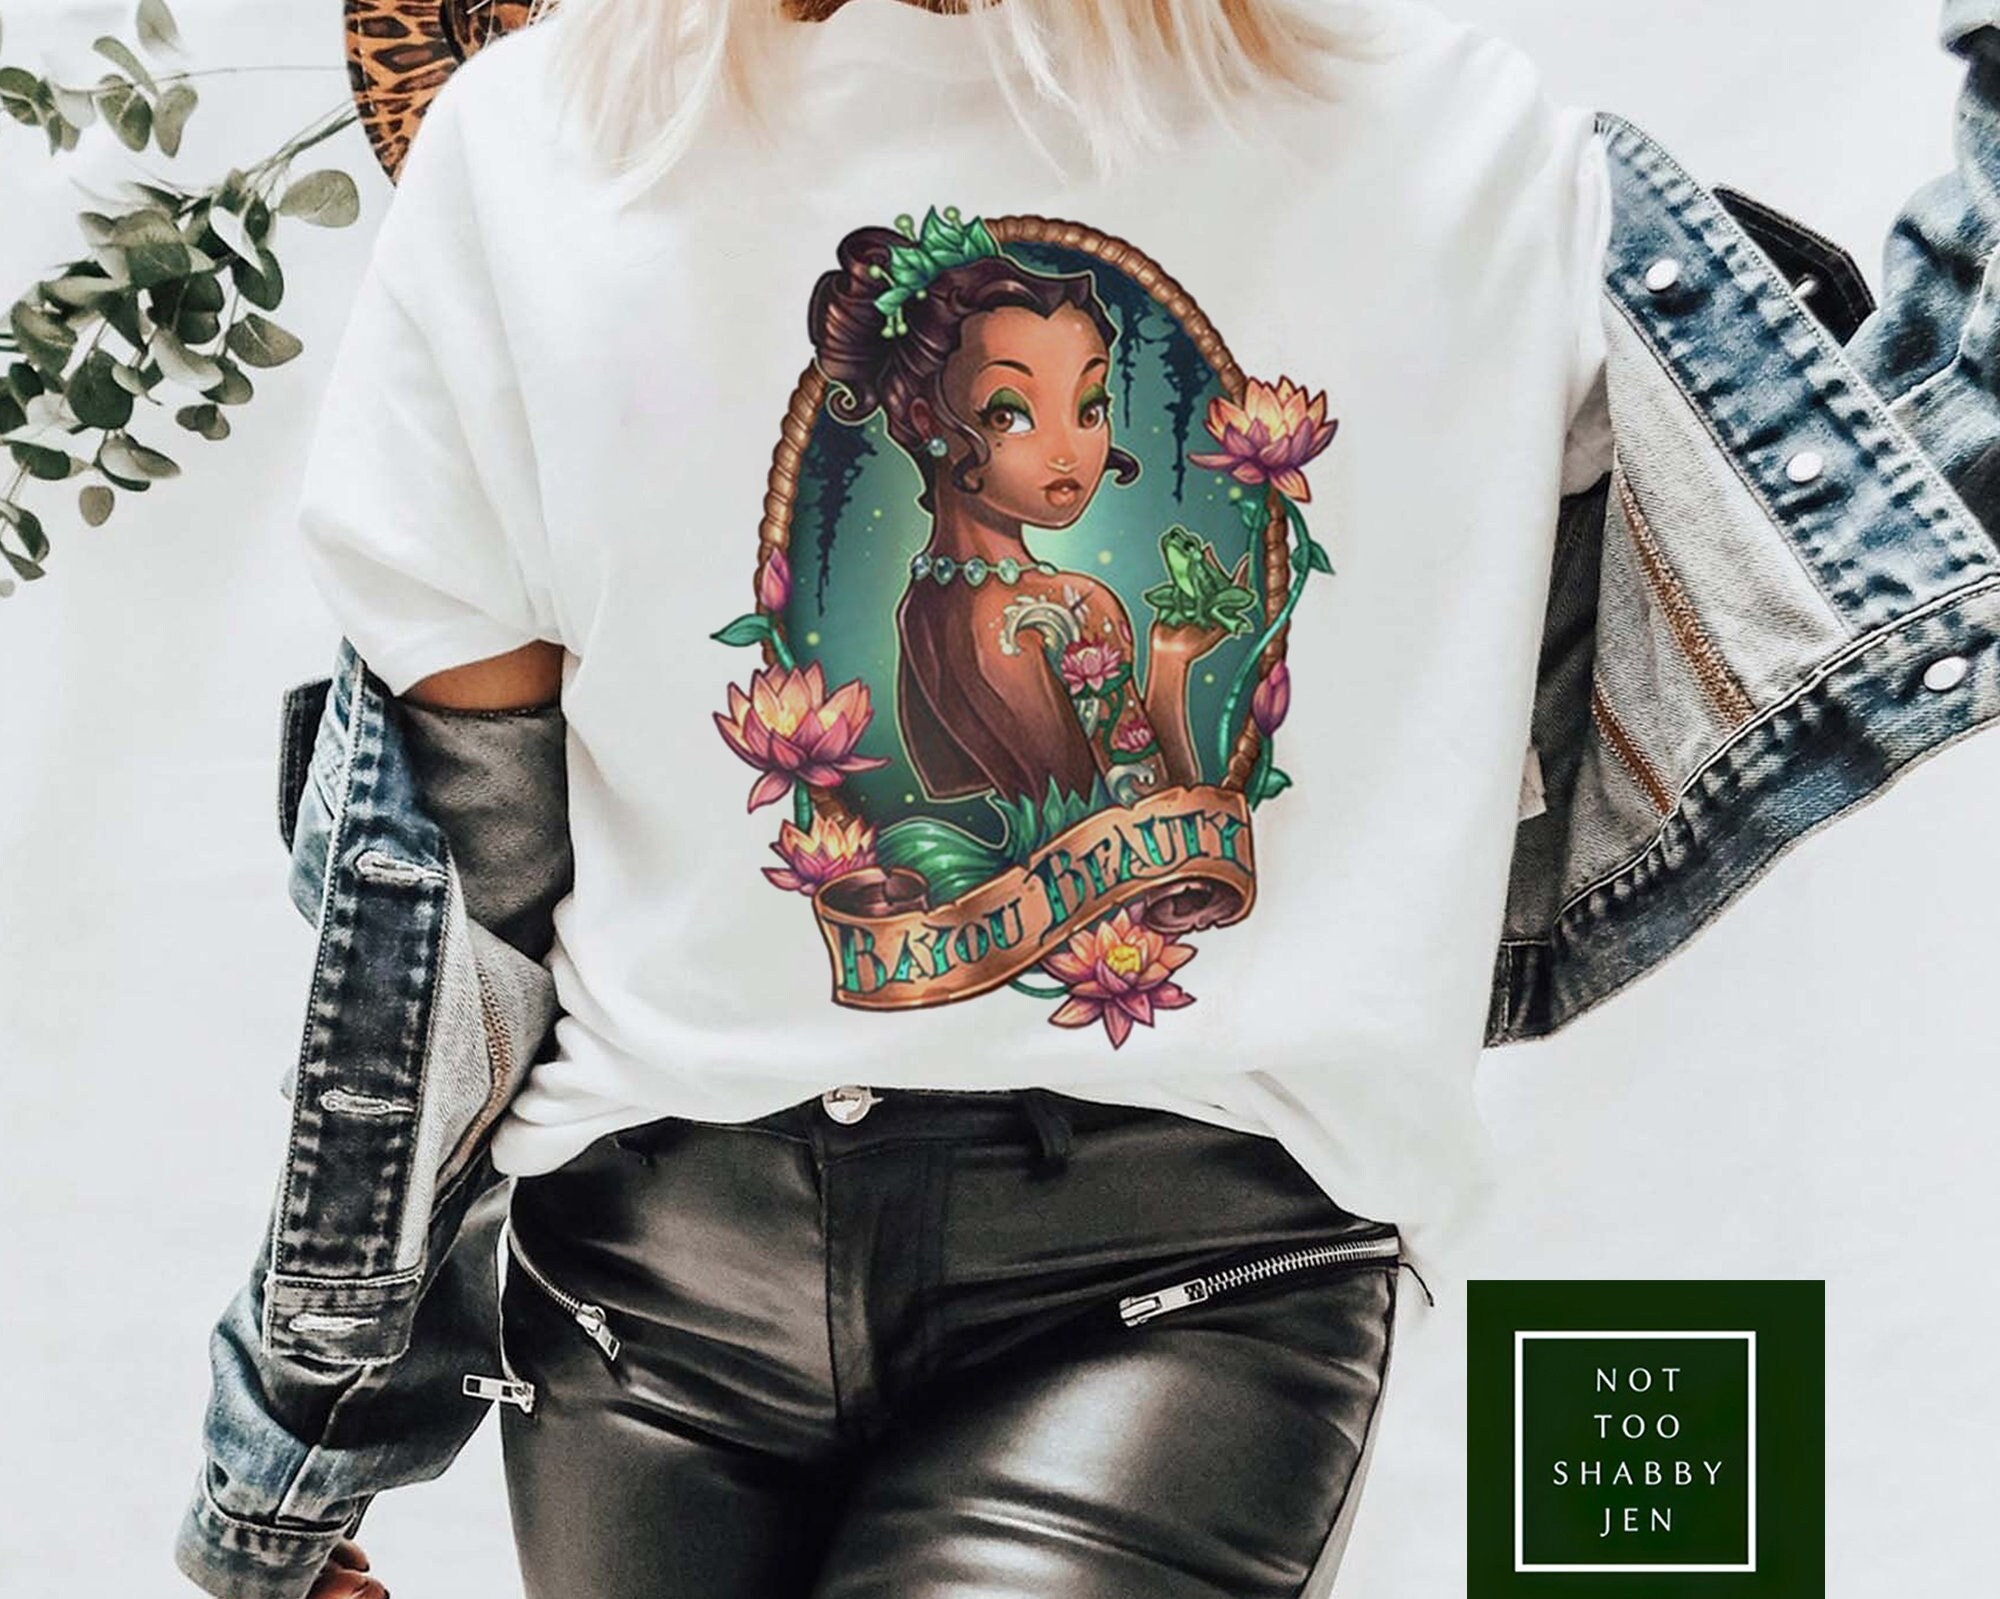 Discover Princess Tiana shirt for women, Princess and the frog shirt